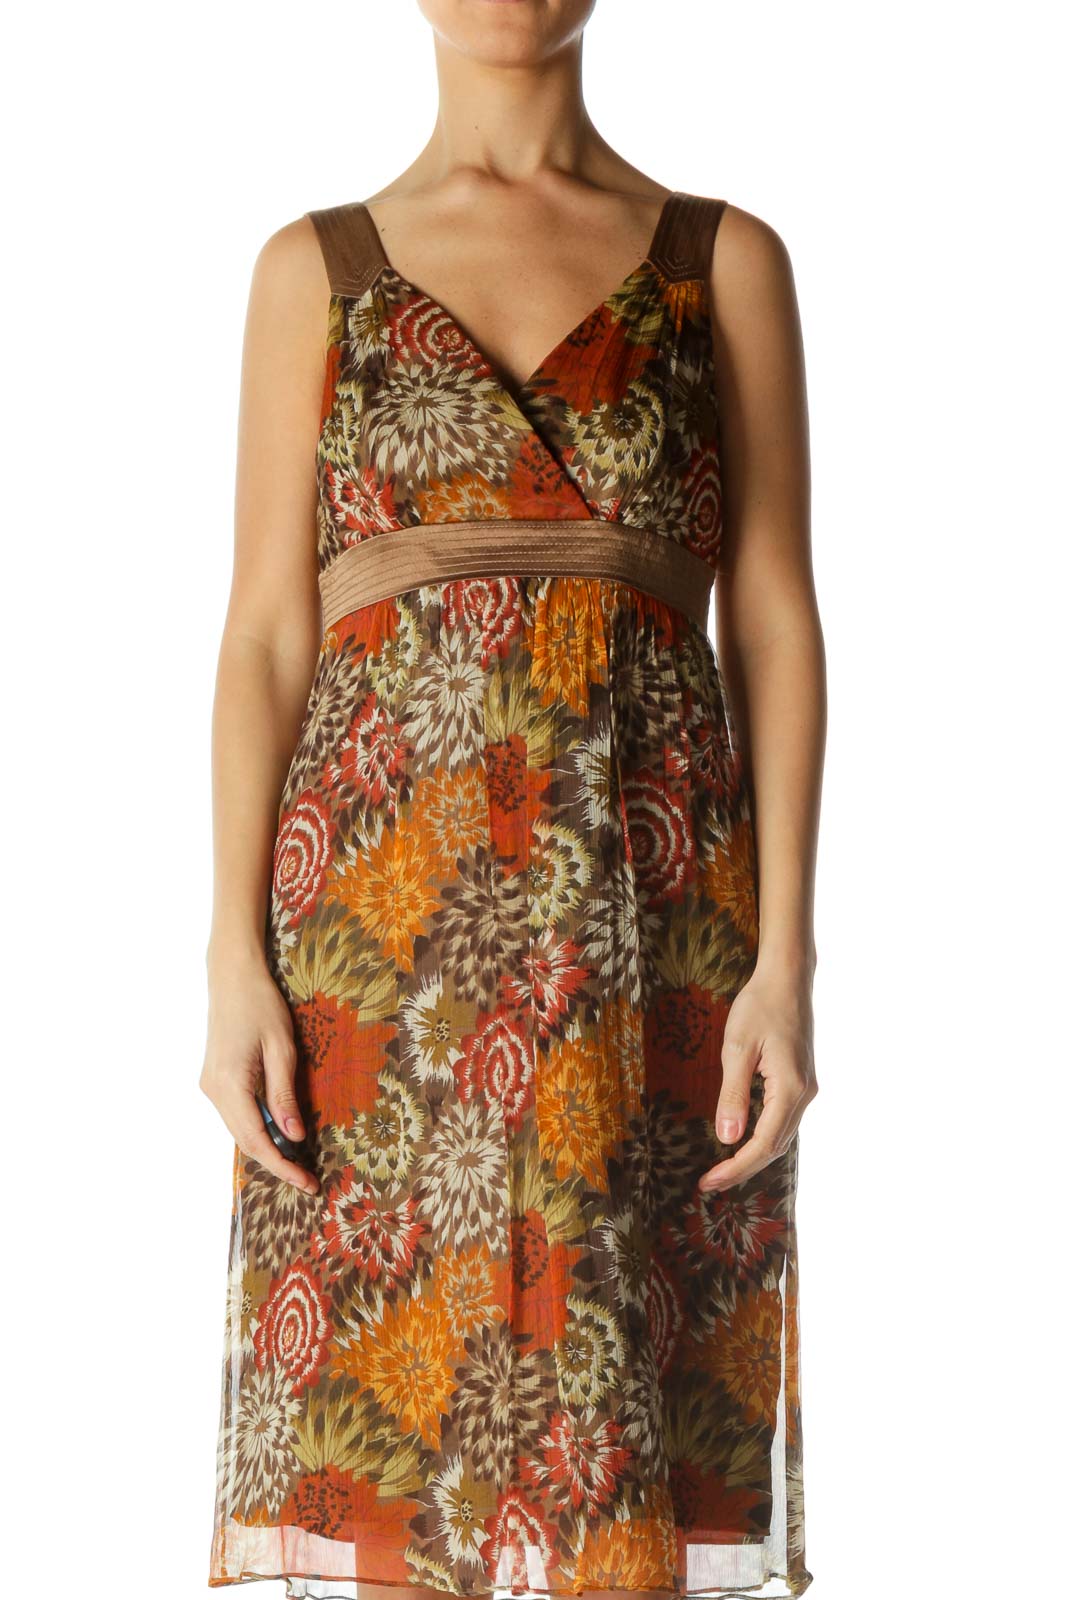 Brown Floral Print Dress Front